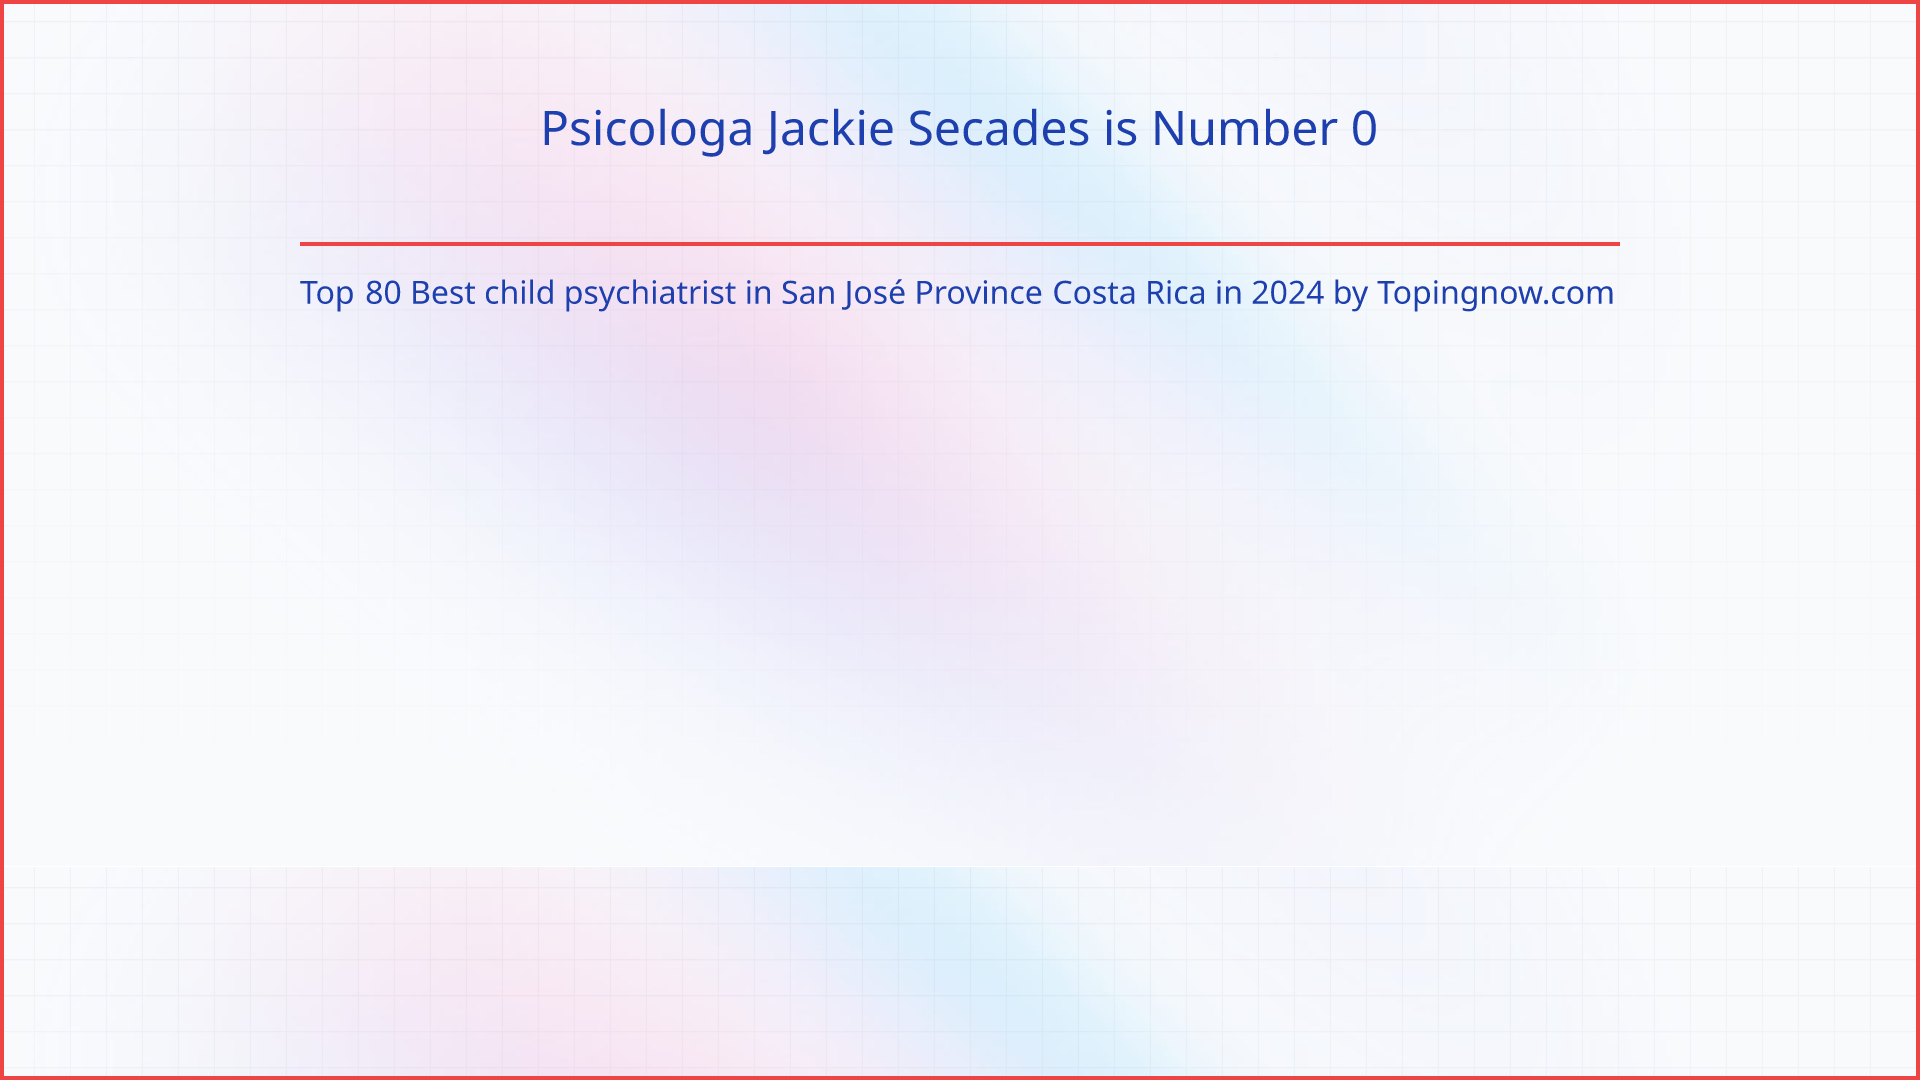 Psicologa Jackie Secades: Top 80 Best child psychiatrist in San José Province Costa Rica in 2024